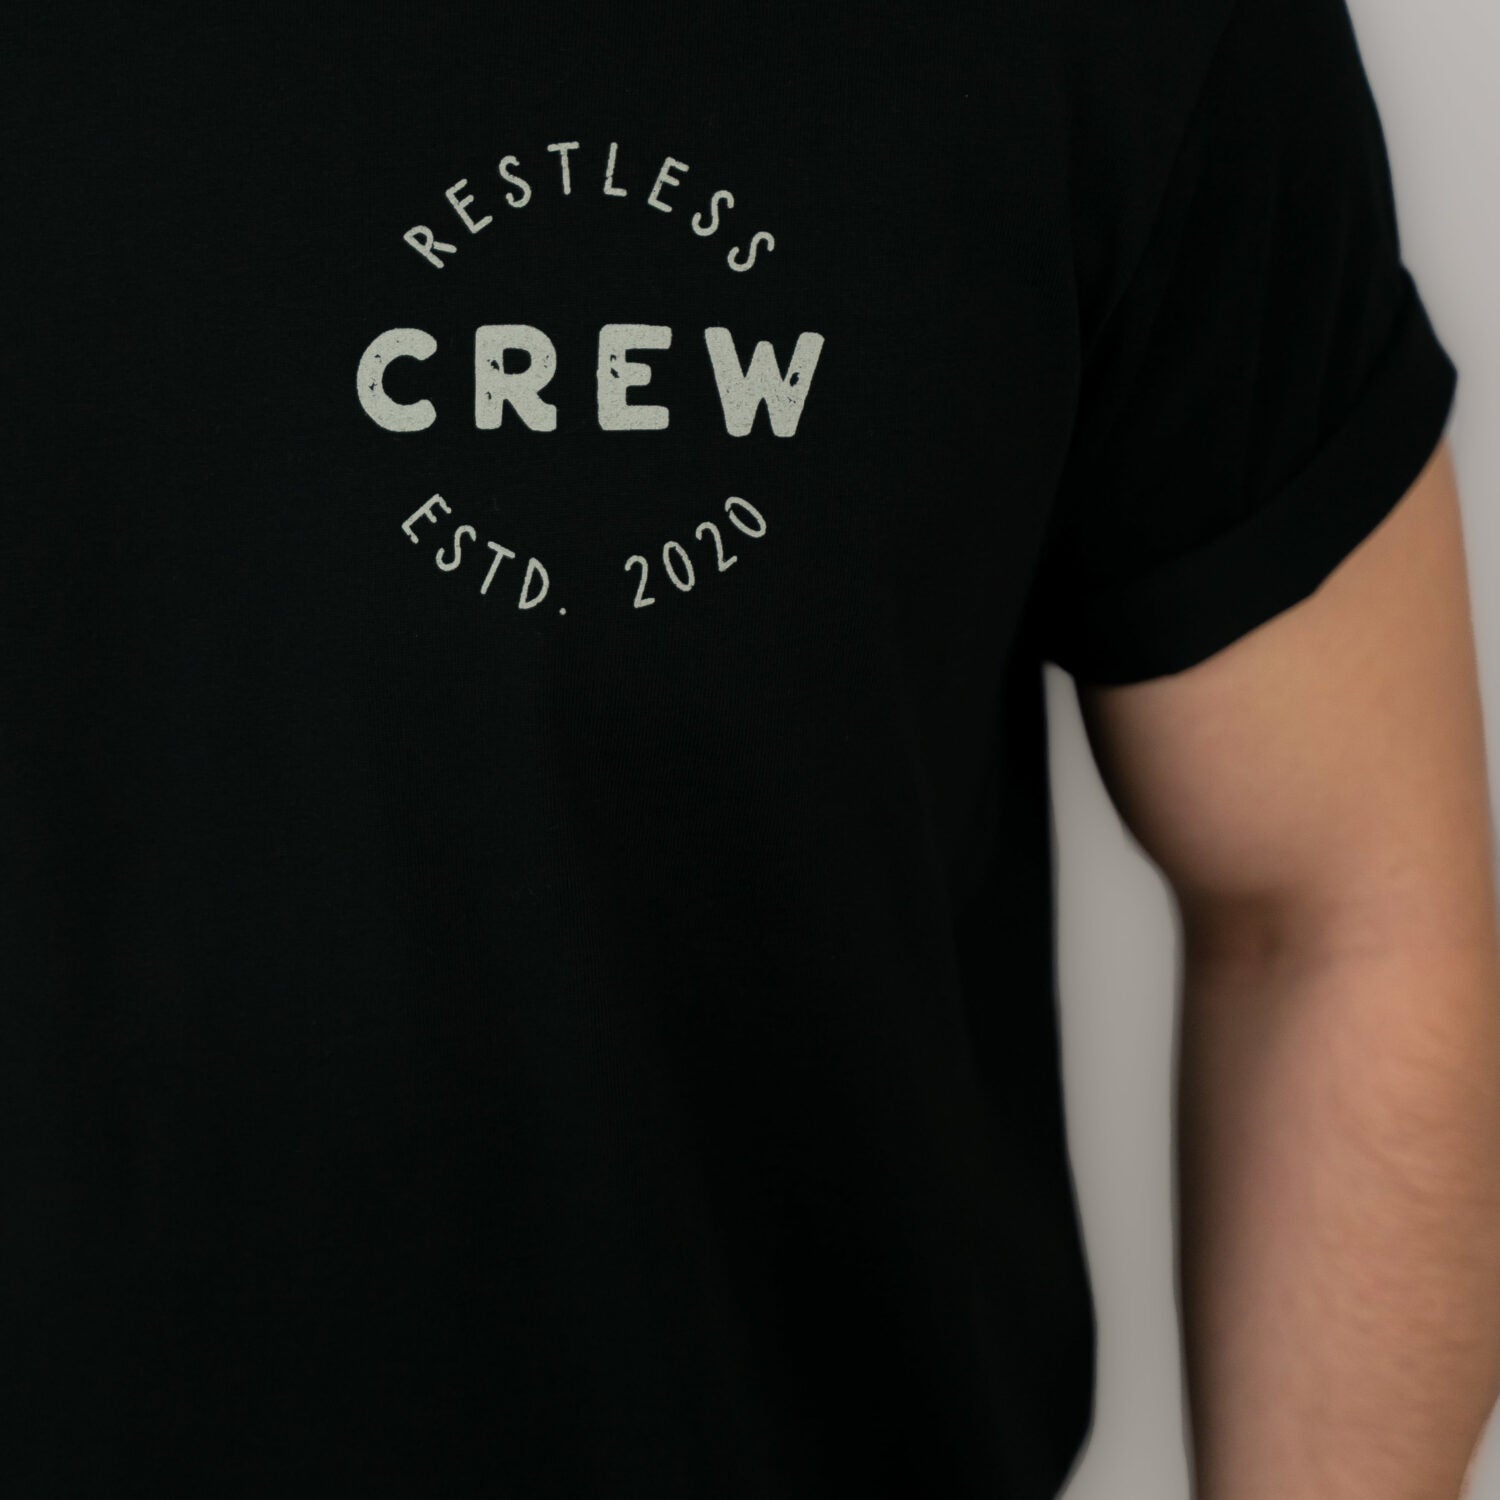 Restless Crew Unisex T-Shirt CREW SHIRT - Black_1.1